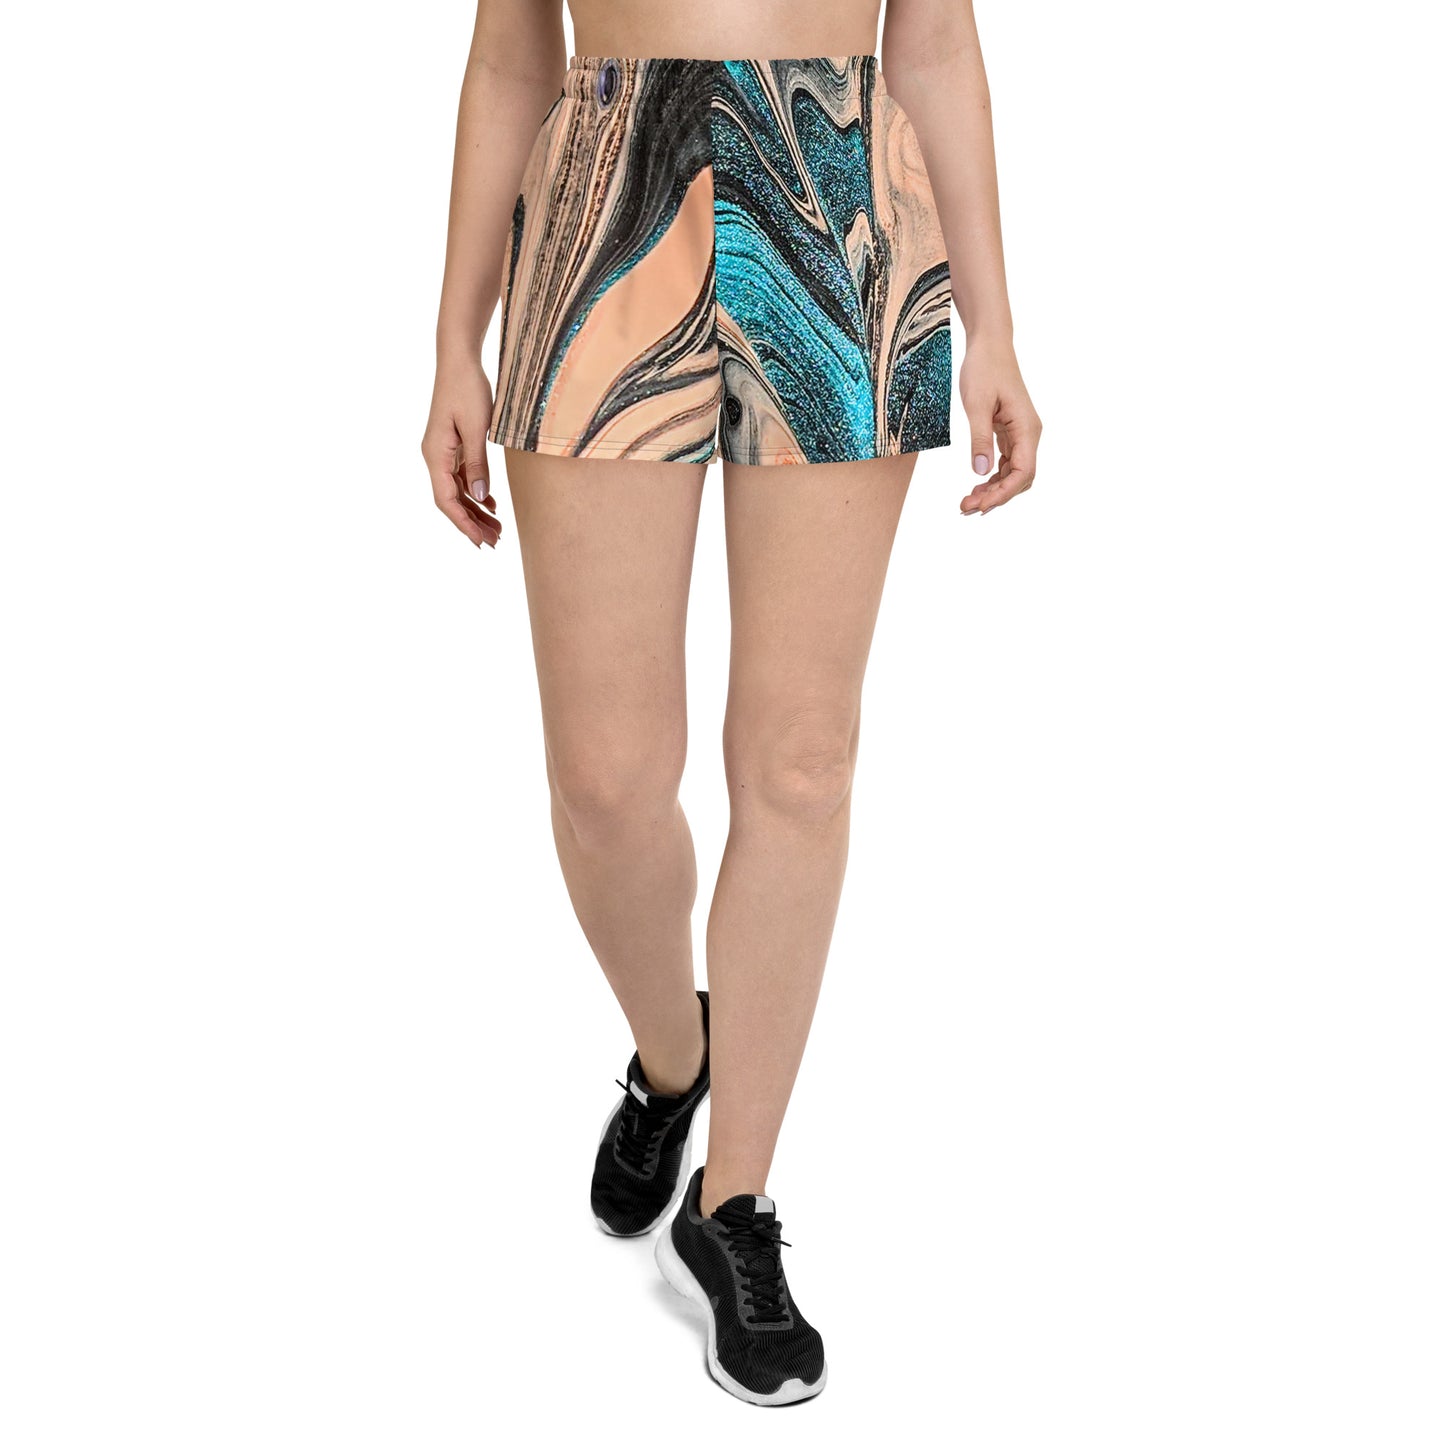 Snooty Fox Art Women’s Athletic Shorts - Romero Design Gem Stone